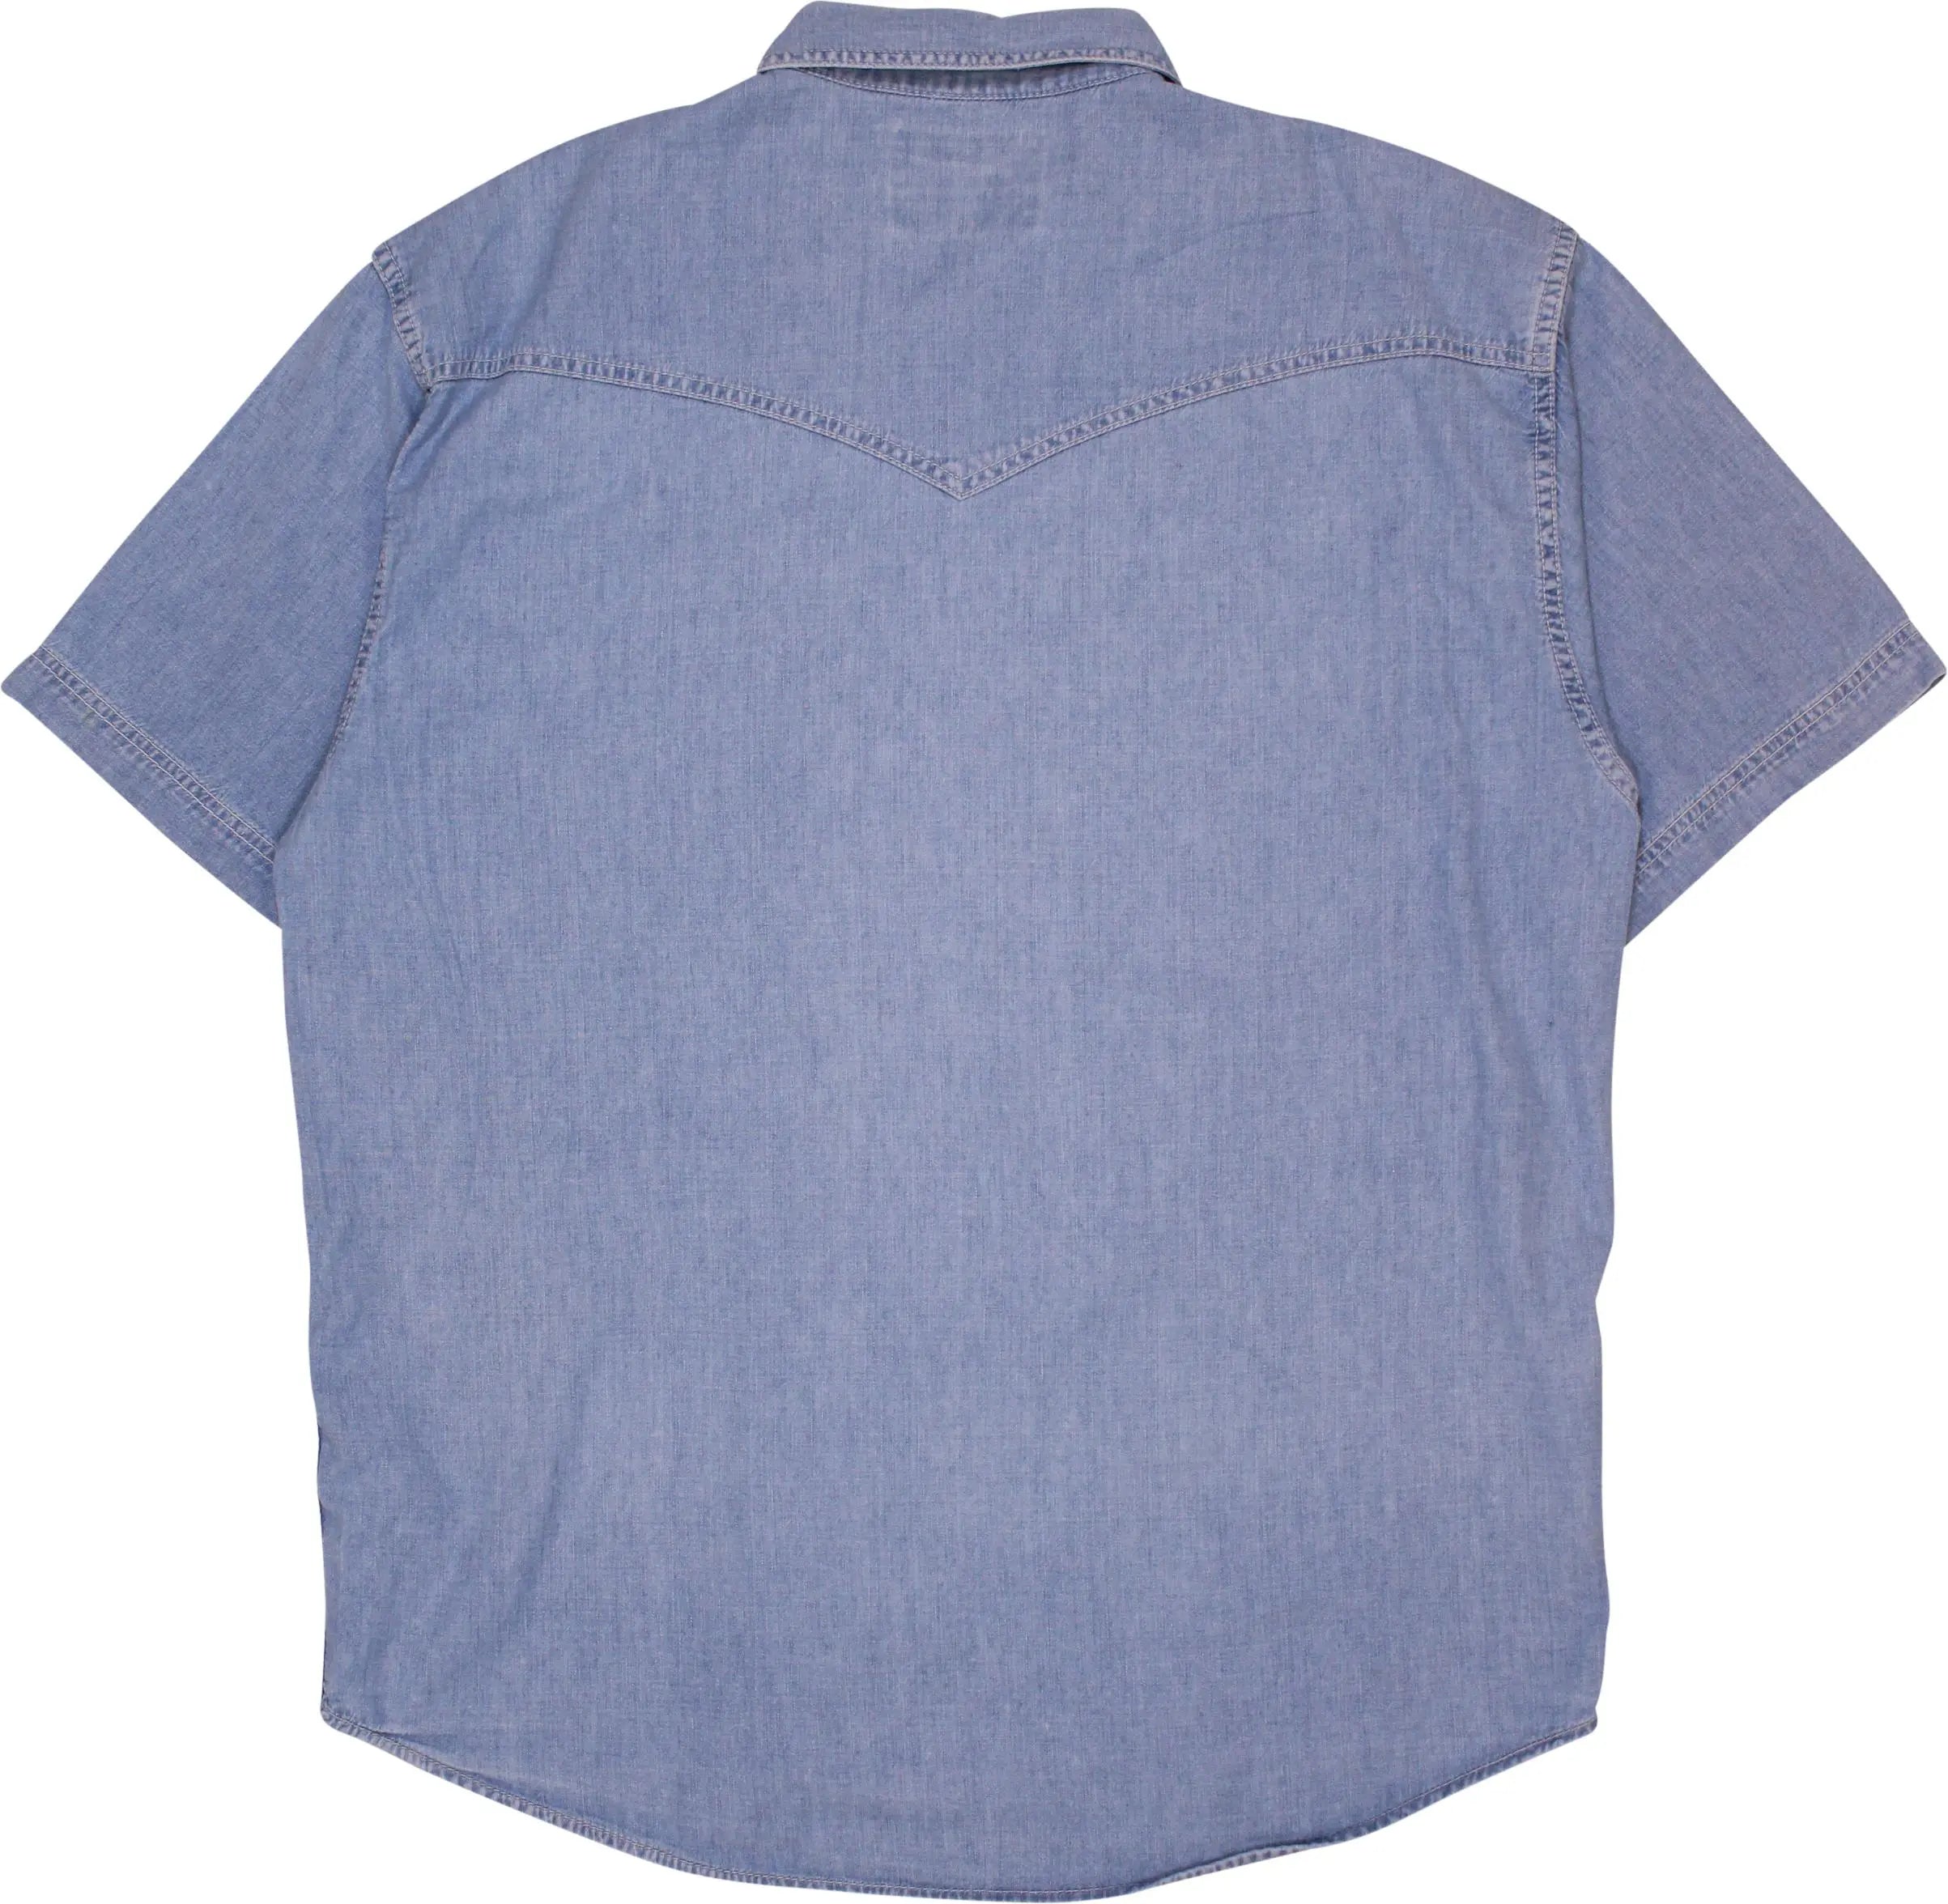 Wrangler - 90s Short Sleeve Denim Shirt- ThriftTale.com - Vintage and second handclothing